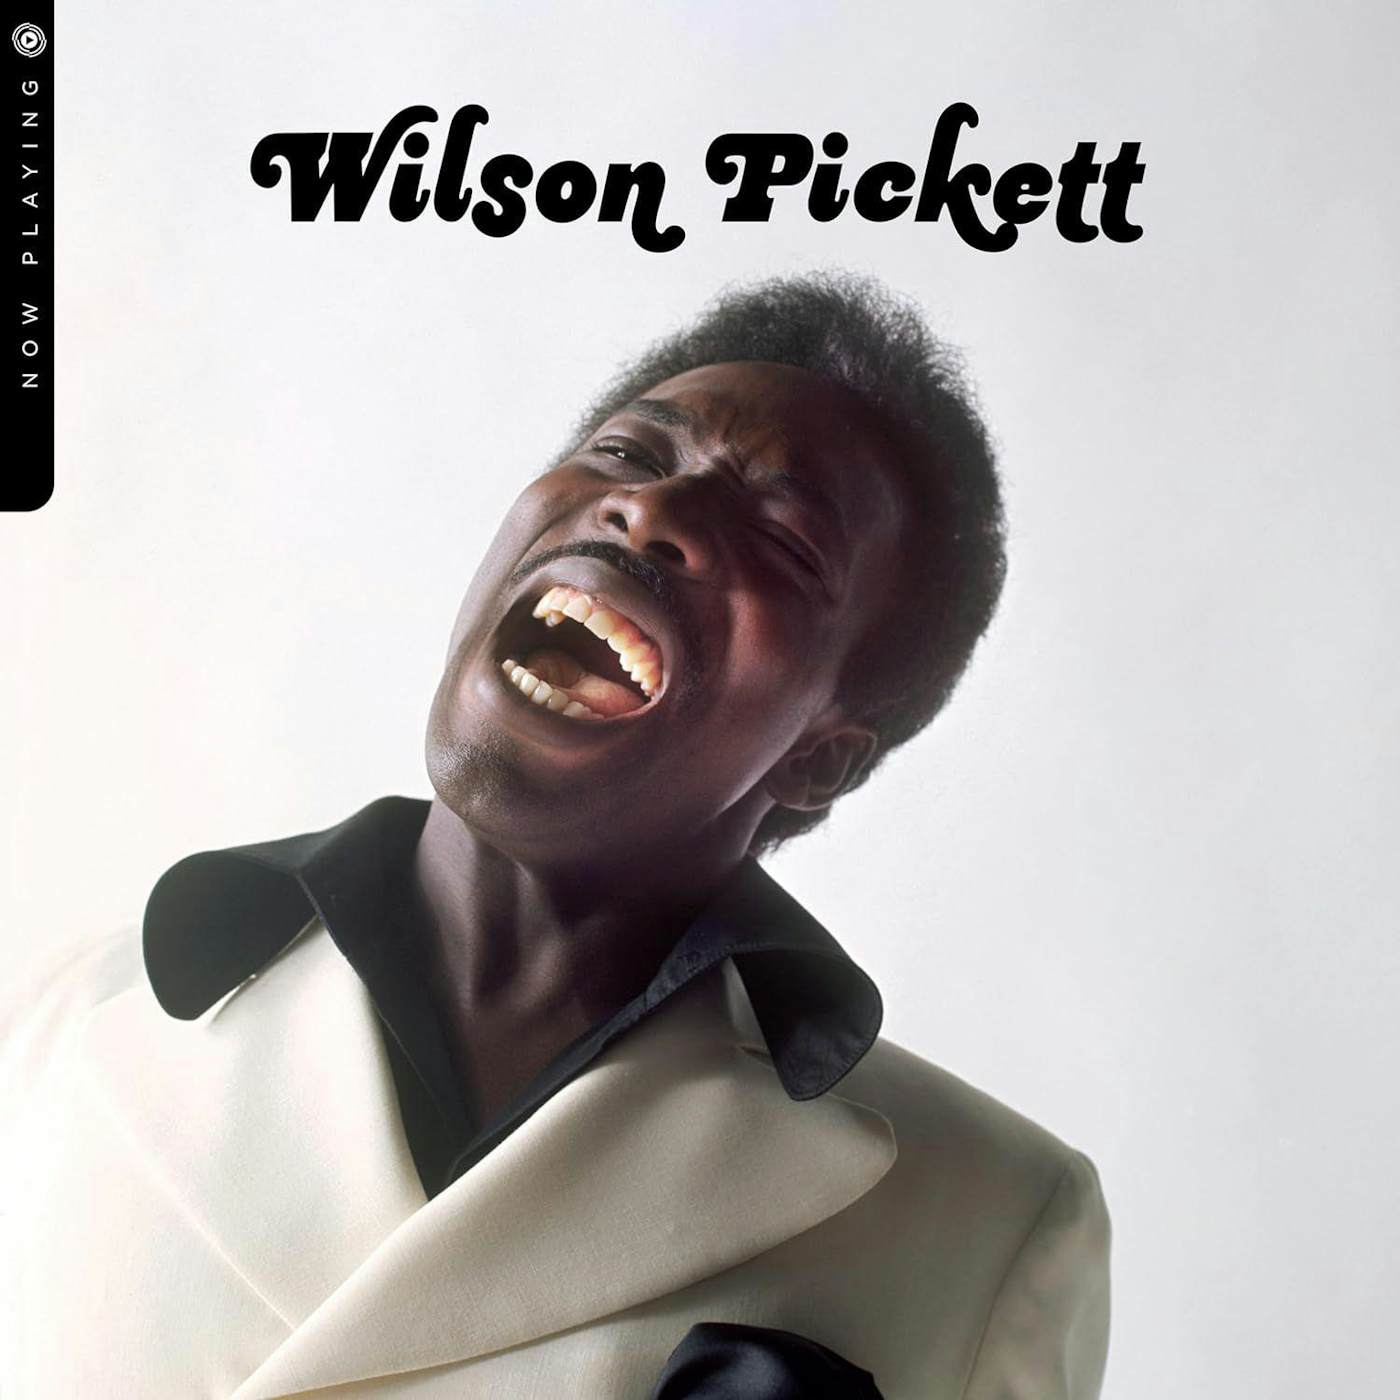 Wilson Pickett Now Playing Vinyl Record